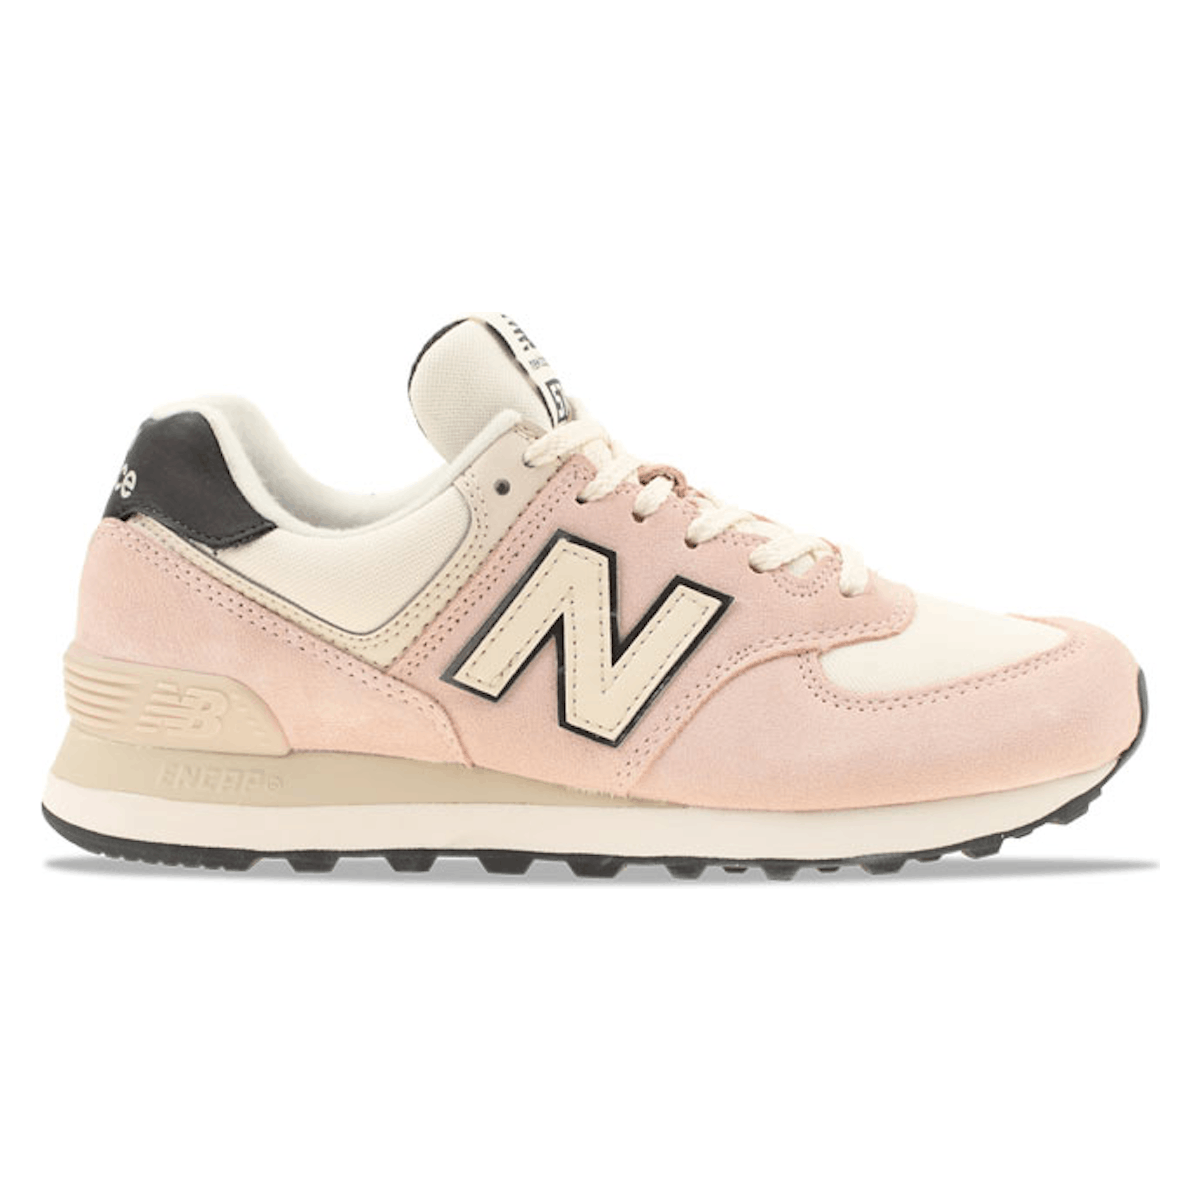 New Balance 574 Washed Pink (Women's)